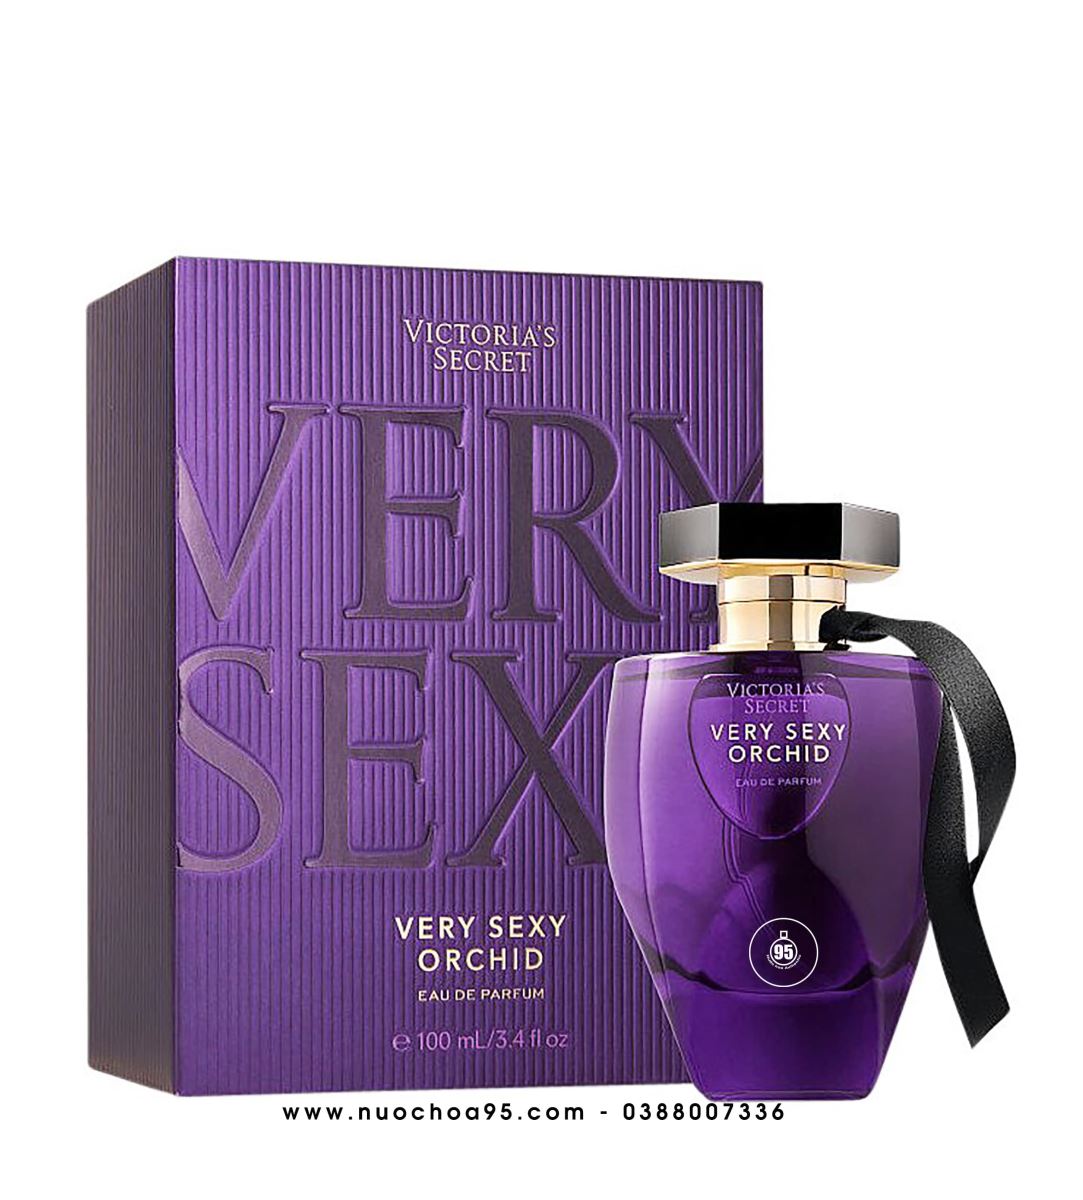 Nước hoa Victoria's Secret Very Sexy Orchid